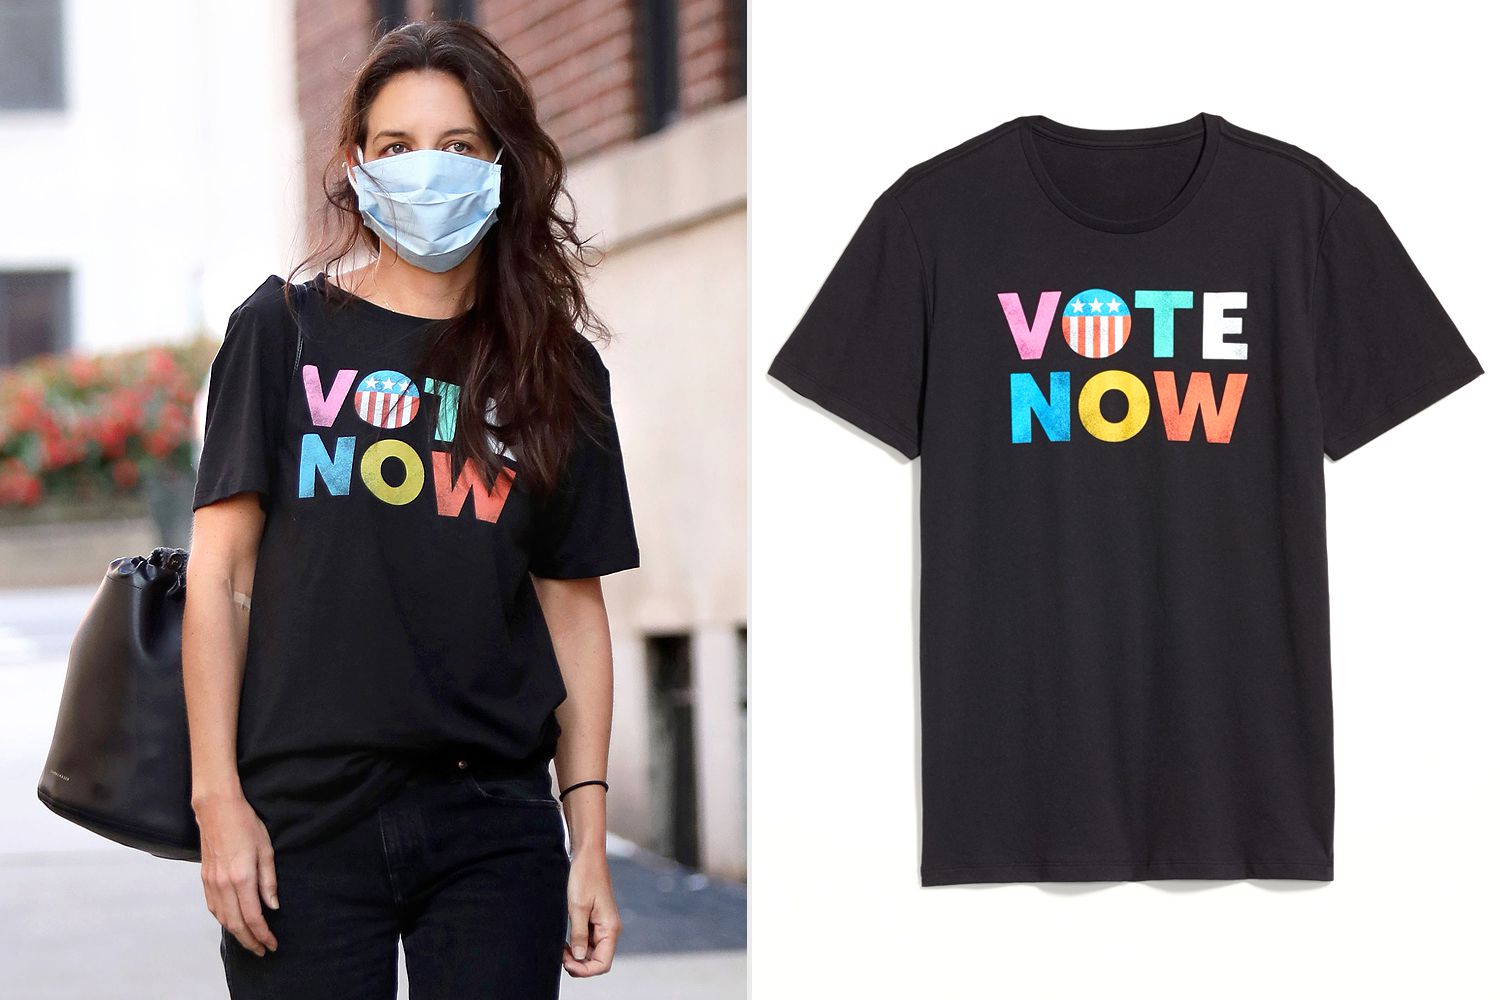 Voting Tee Vote Shirt Politics Shirt Election 2020 Voter T-shirt